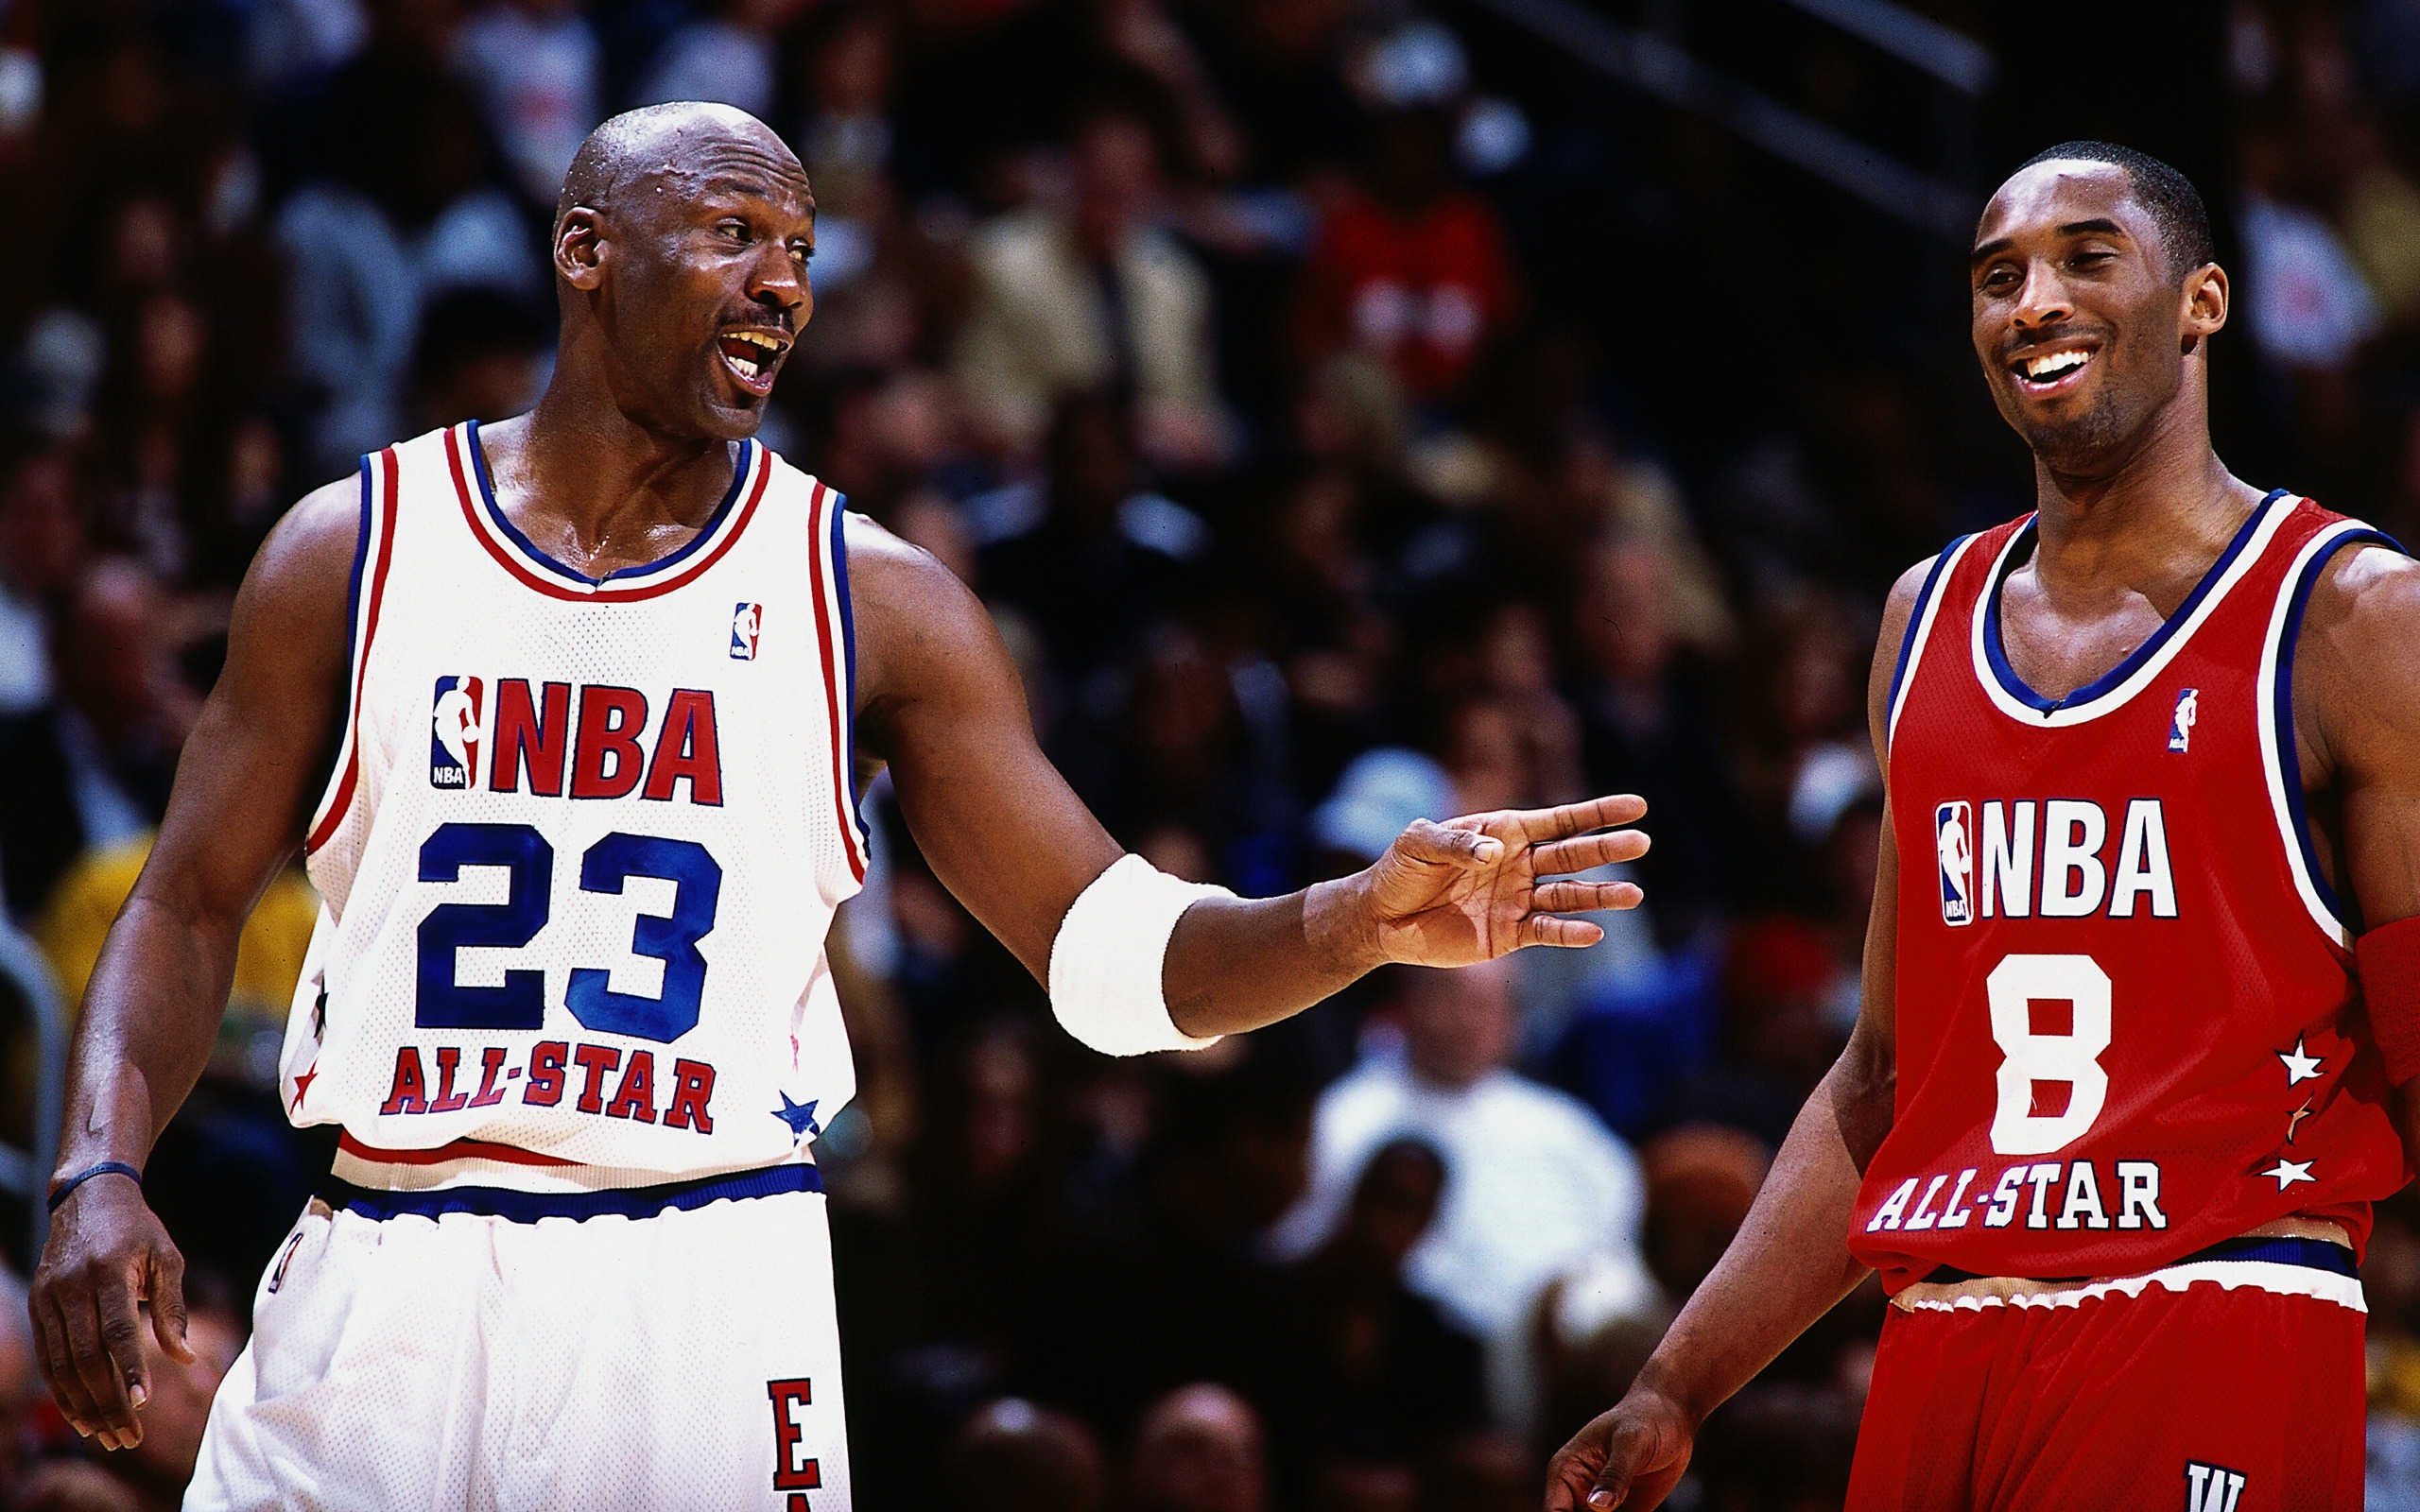 Kobe Bryant and Michael Jordan for 2560 x 1600 widescreen resolution